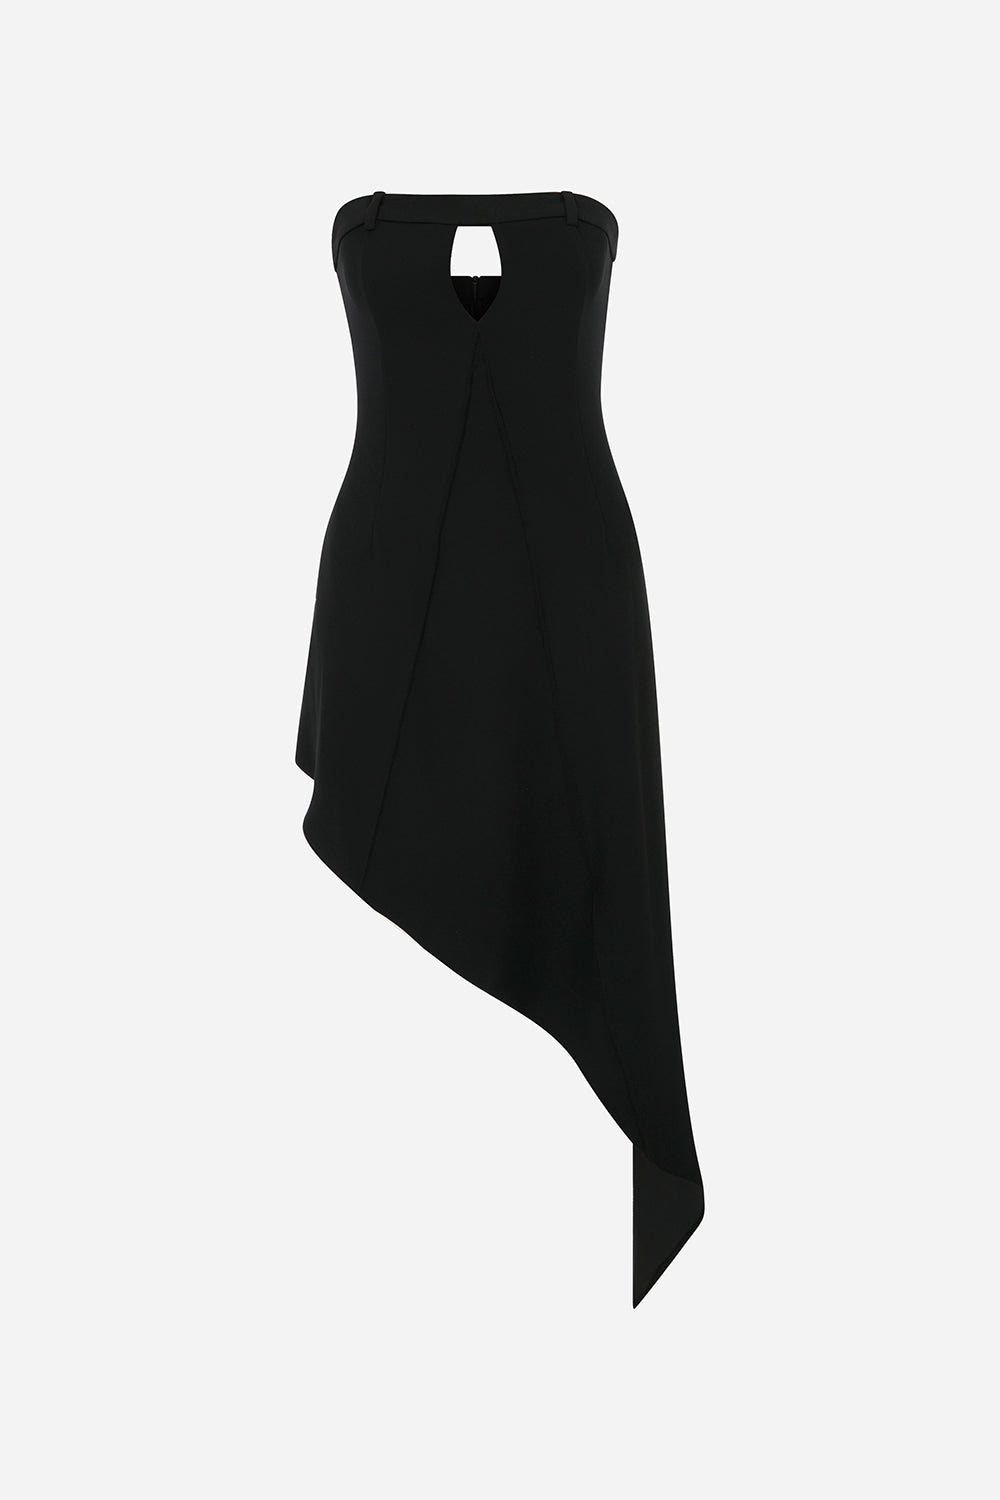 Liya - Strapless Assymetric Dress